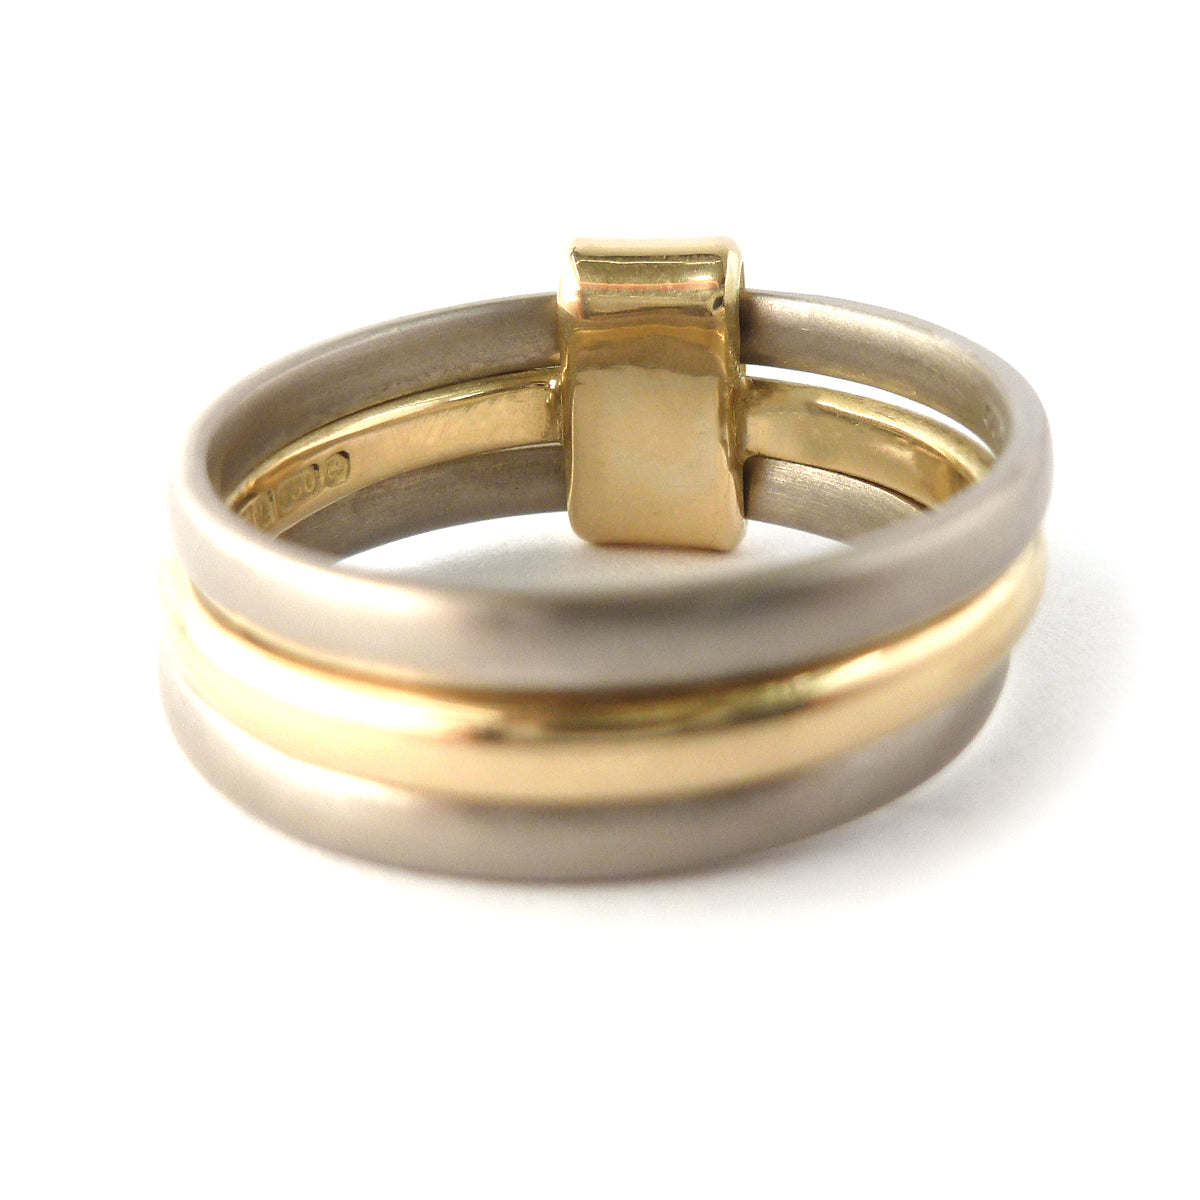 Triple band ring, interlocking and linked. Contemporary jewellery, handmade, modern, bespoke ring by Sue Lane